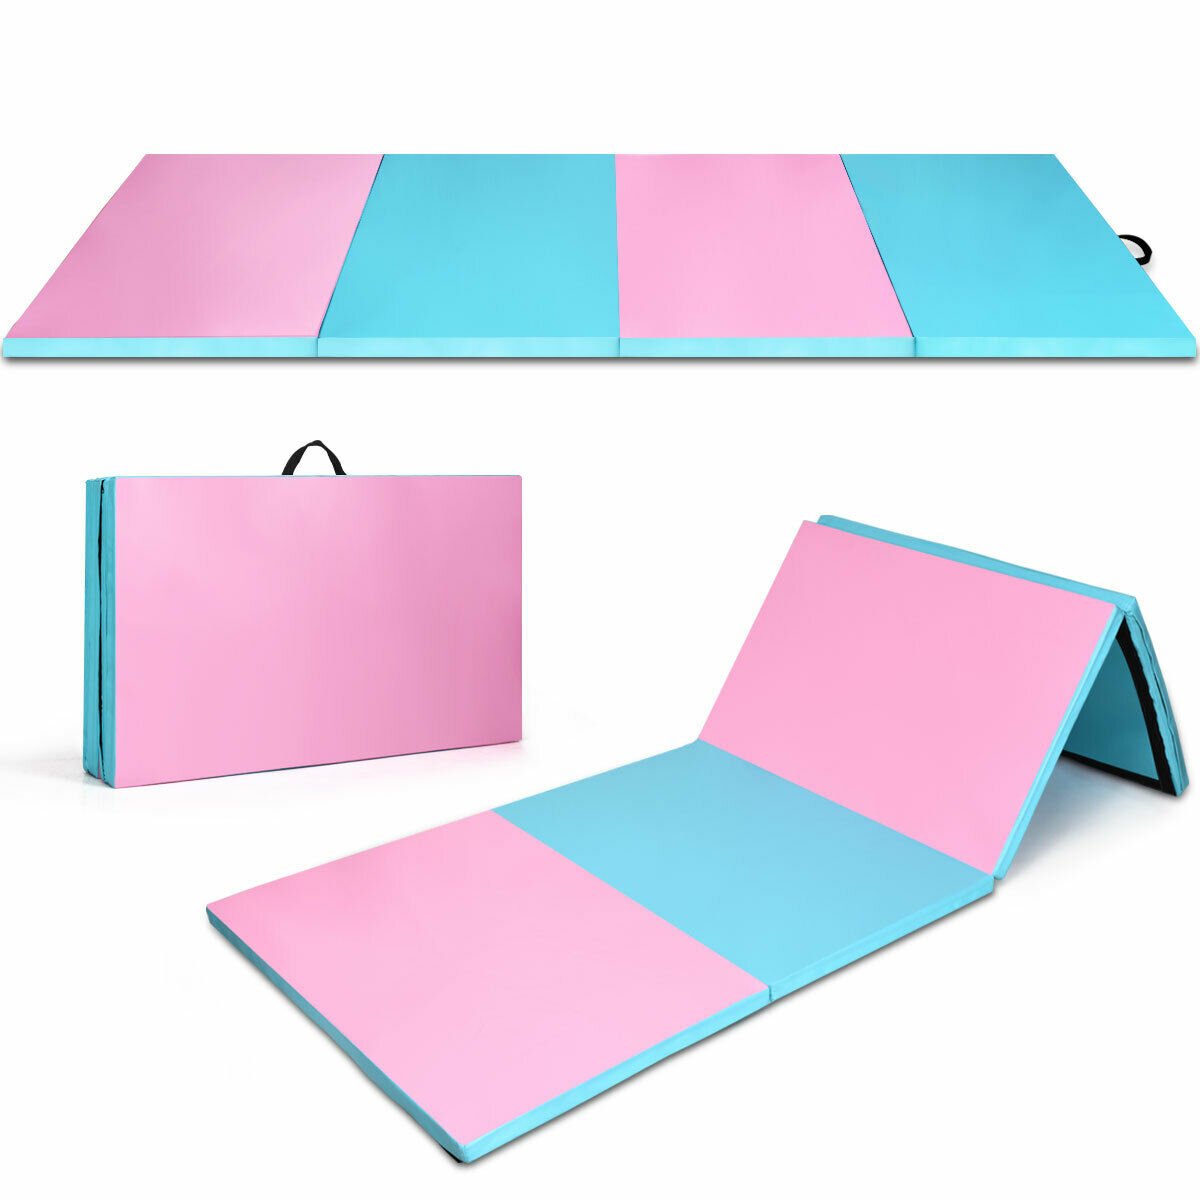 8 x 4 Feet Folding Gymnastics Tumbling Mat-Blue&Pink, Pink & Blue at Gallery Canada